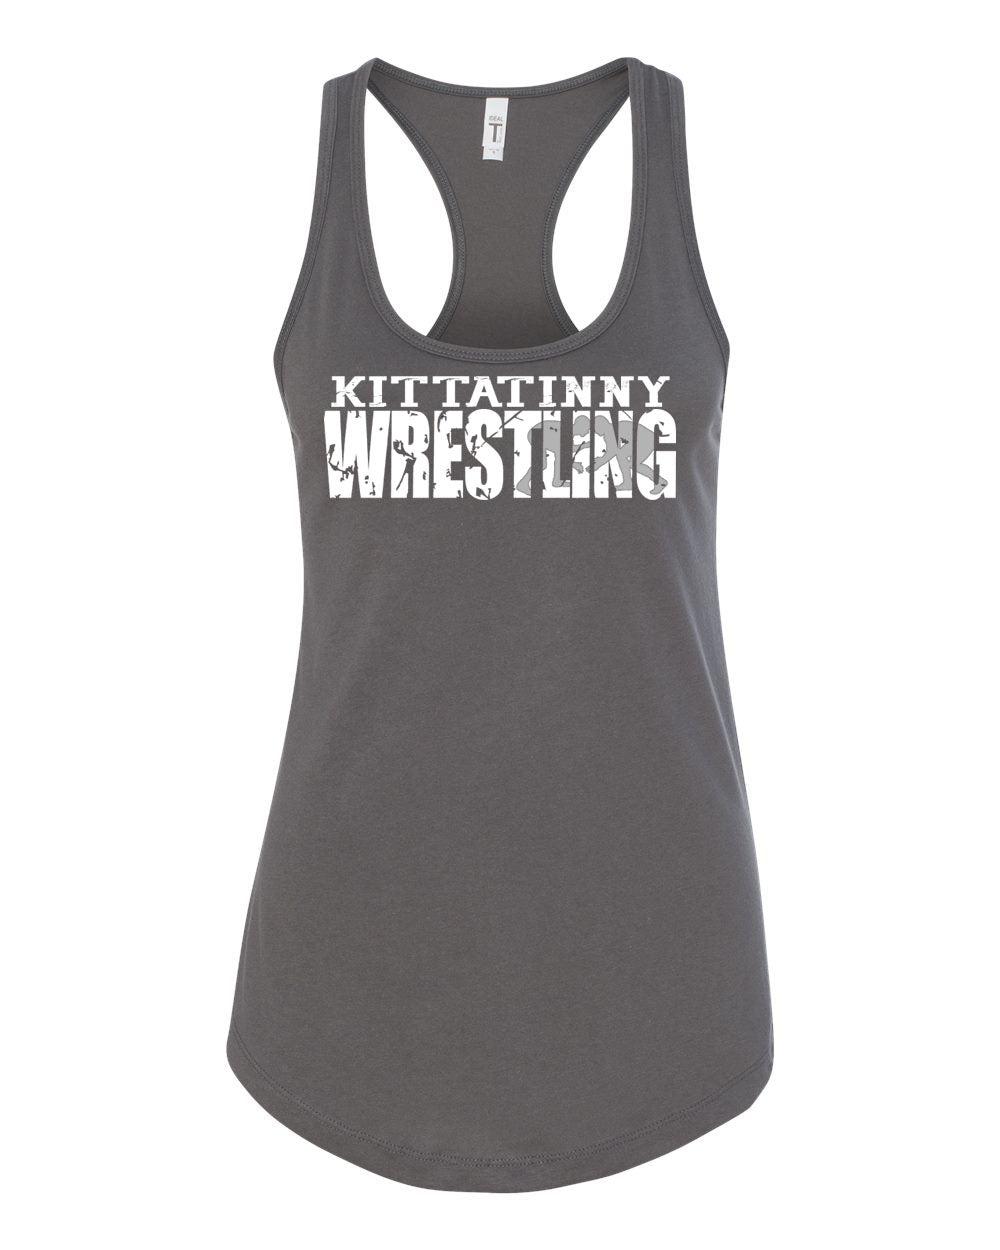 Kittatinny wrestling Design 2 Tank Top